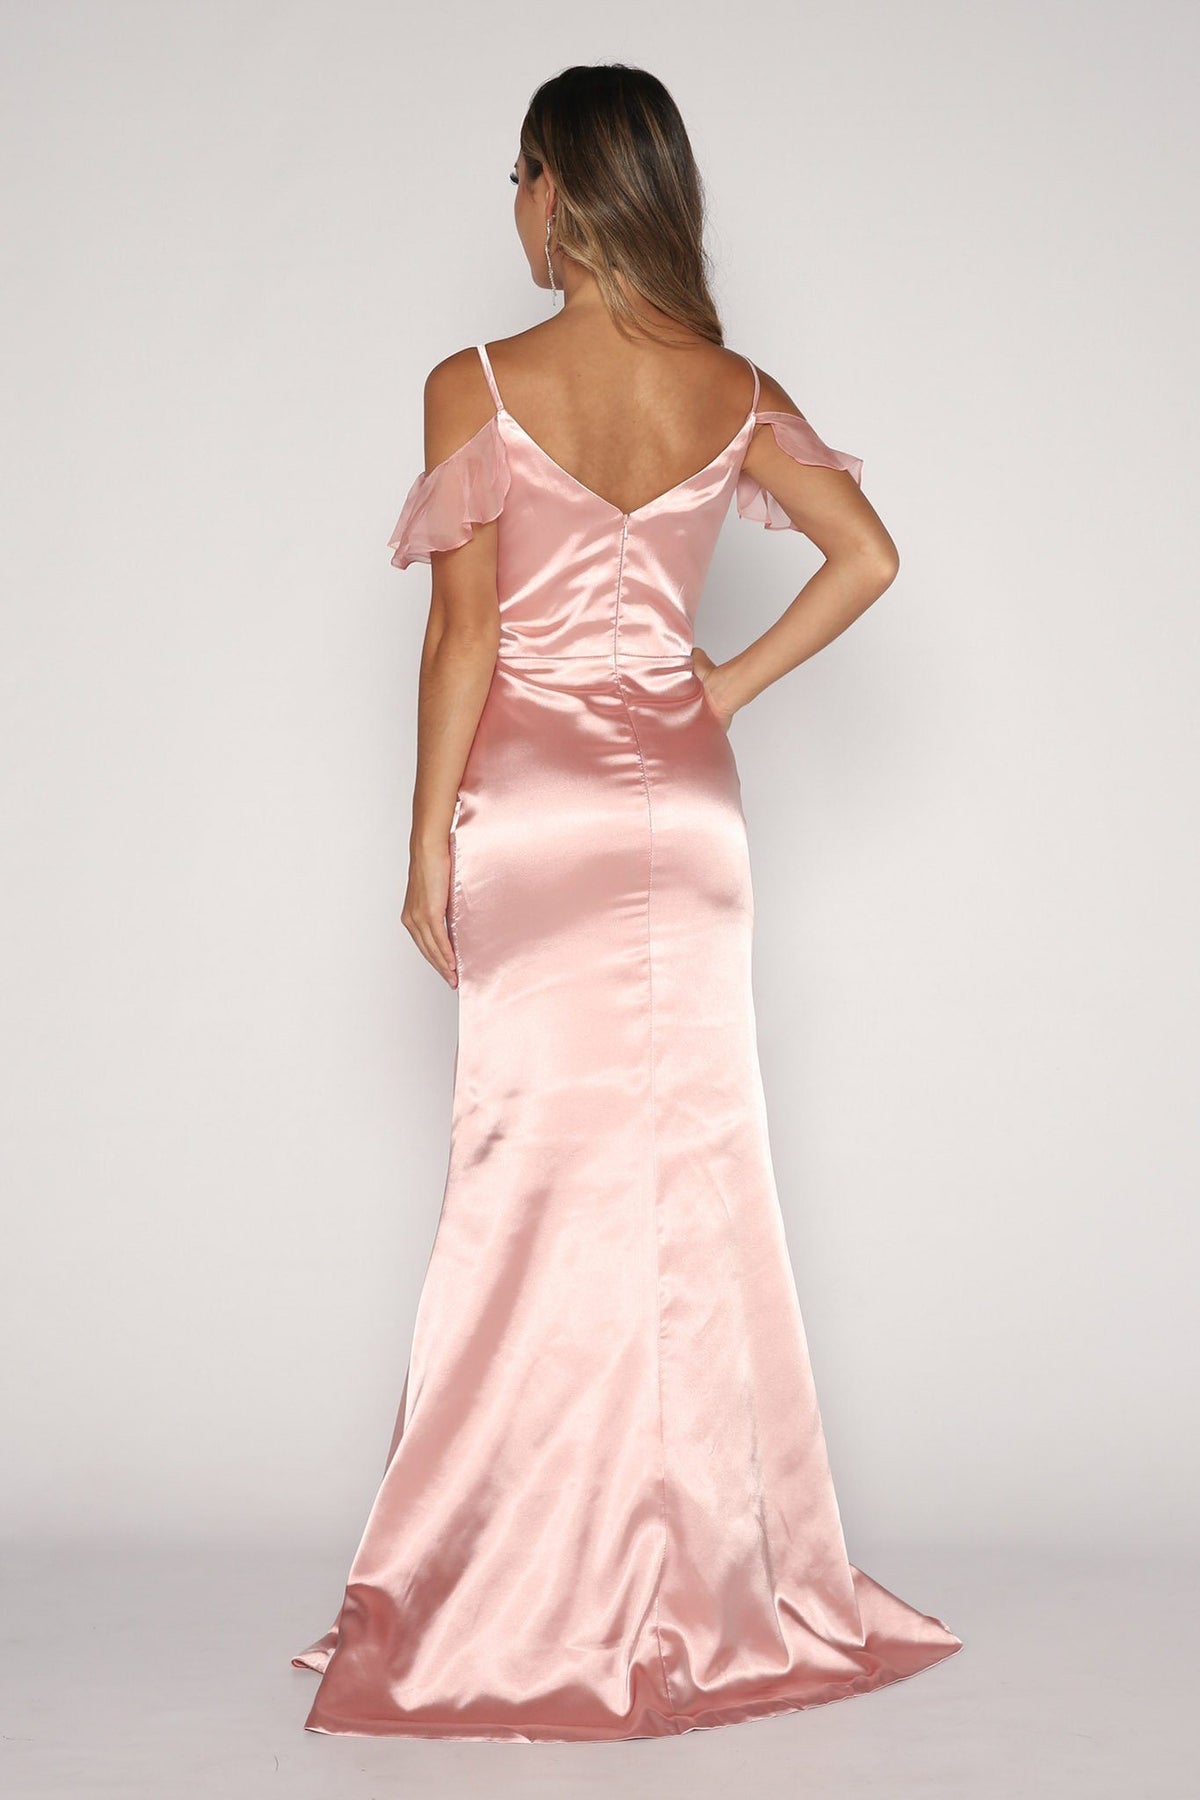 Malani Satin Maxi Dress - Blush Pink (XS - Clearance Sale)